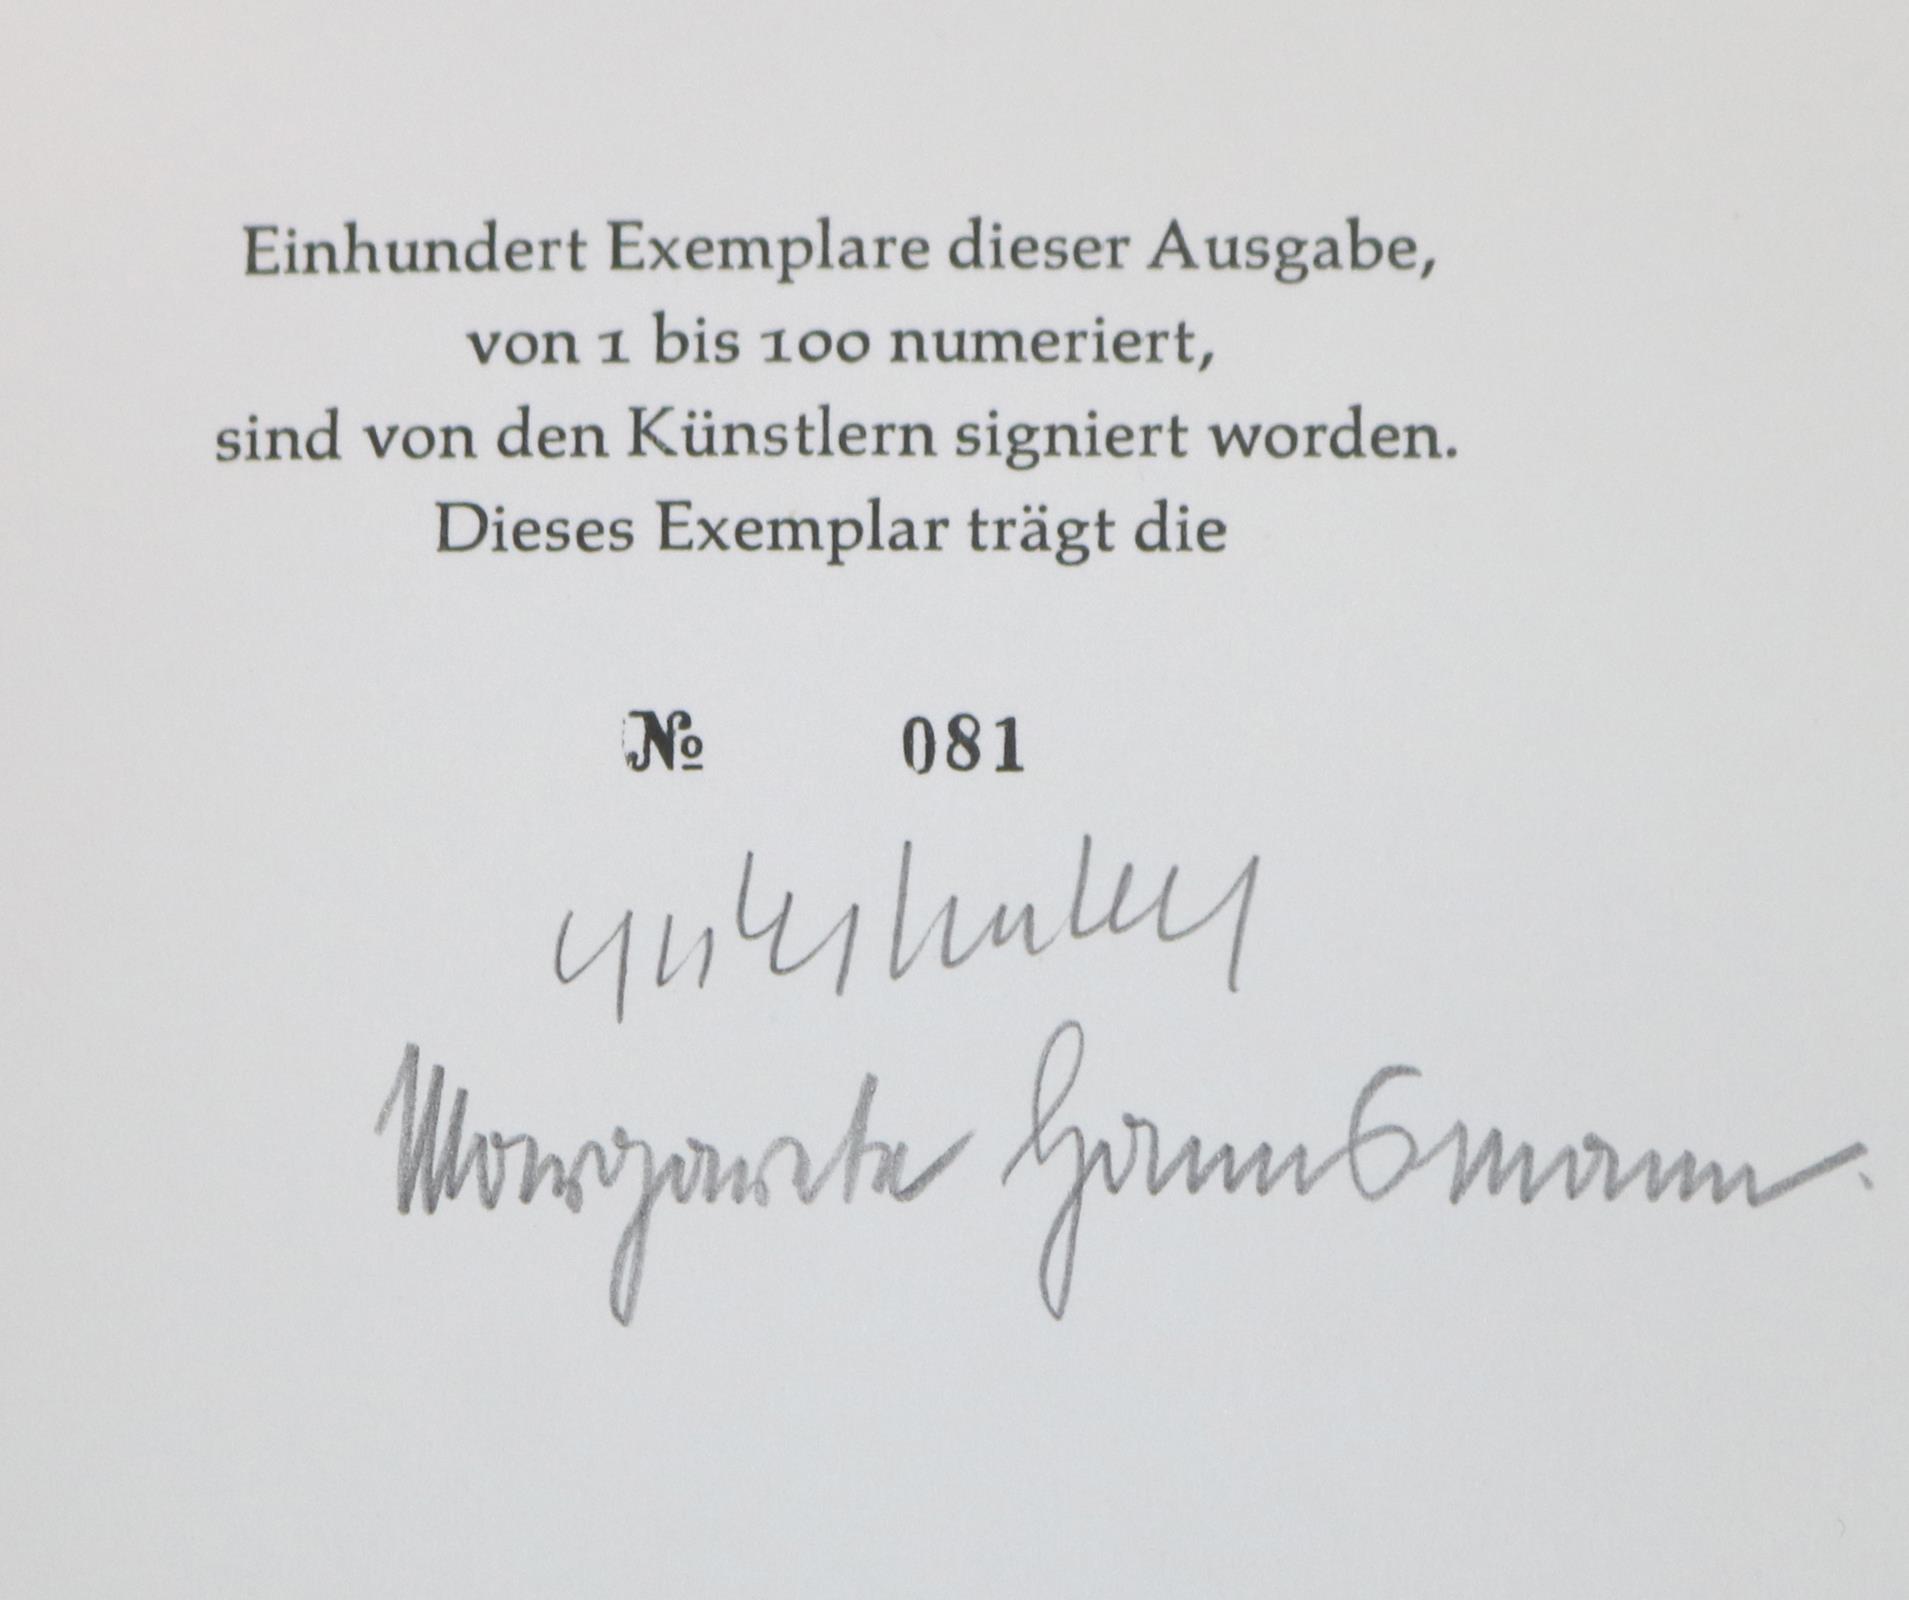 Hannsmann,M. - Image 2 of 2